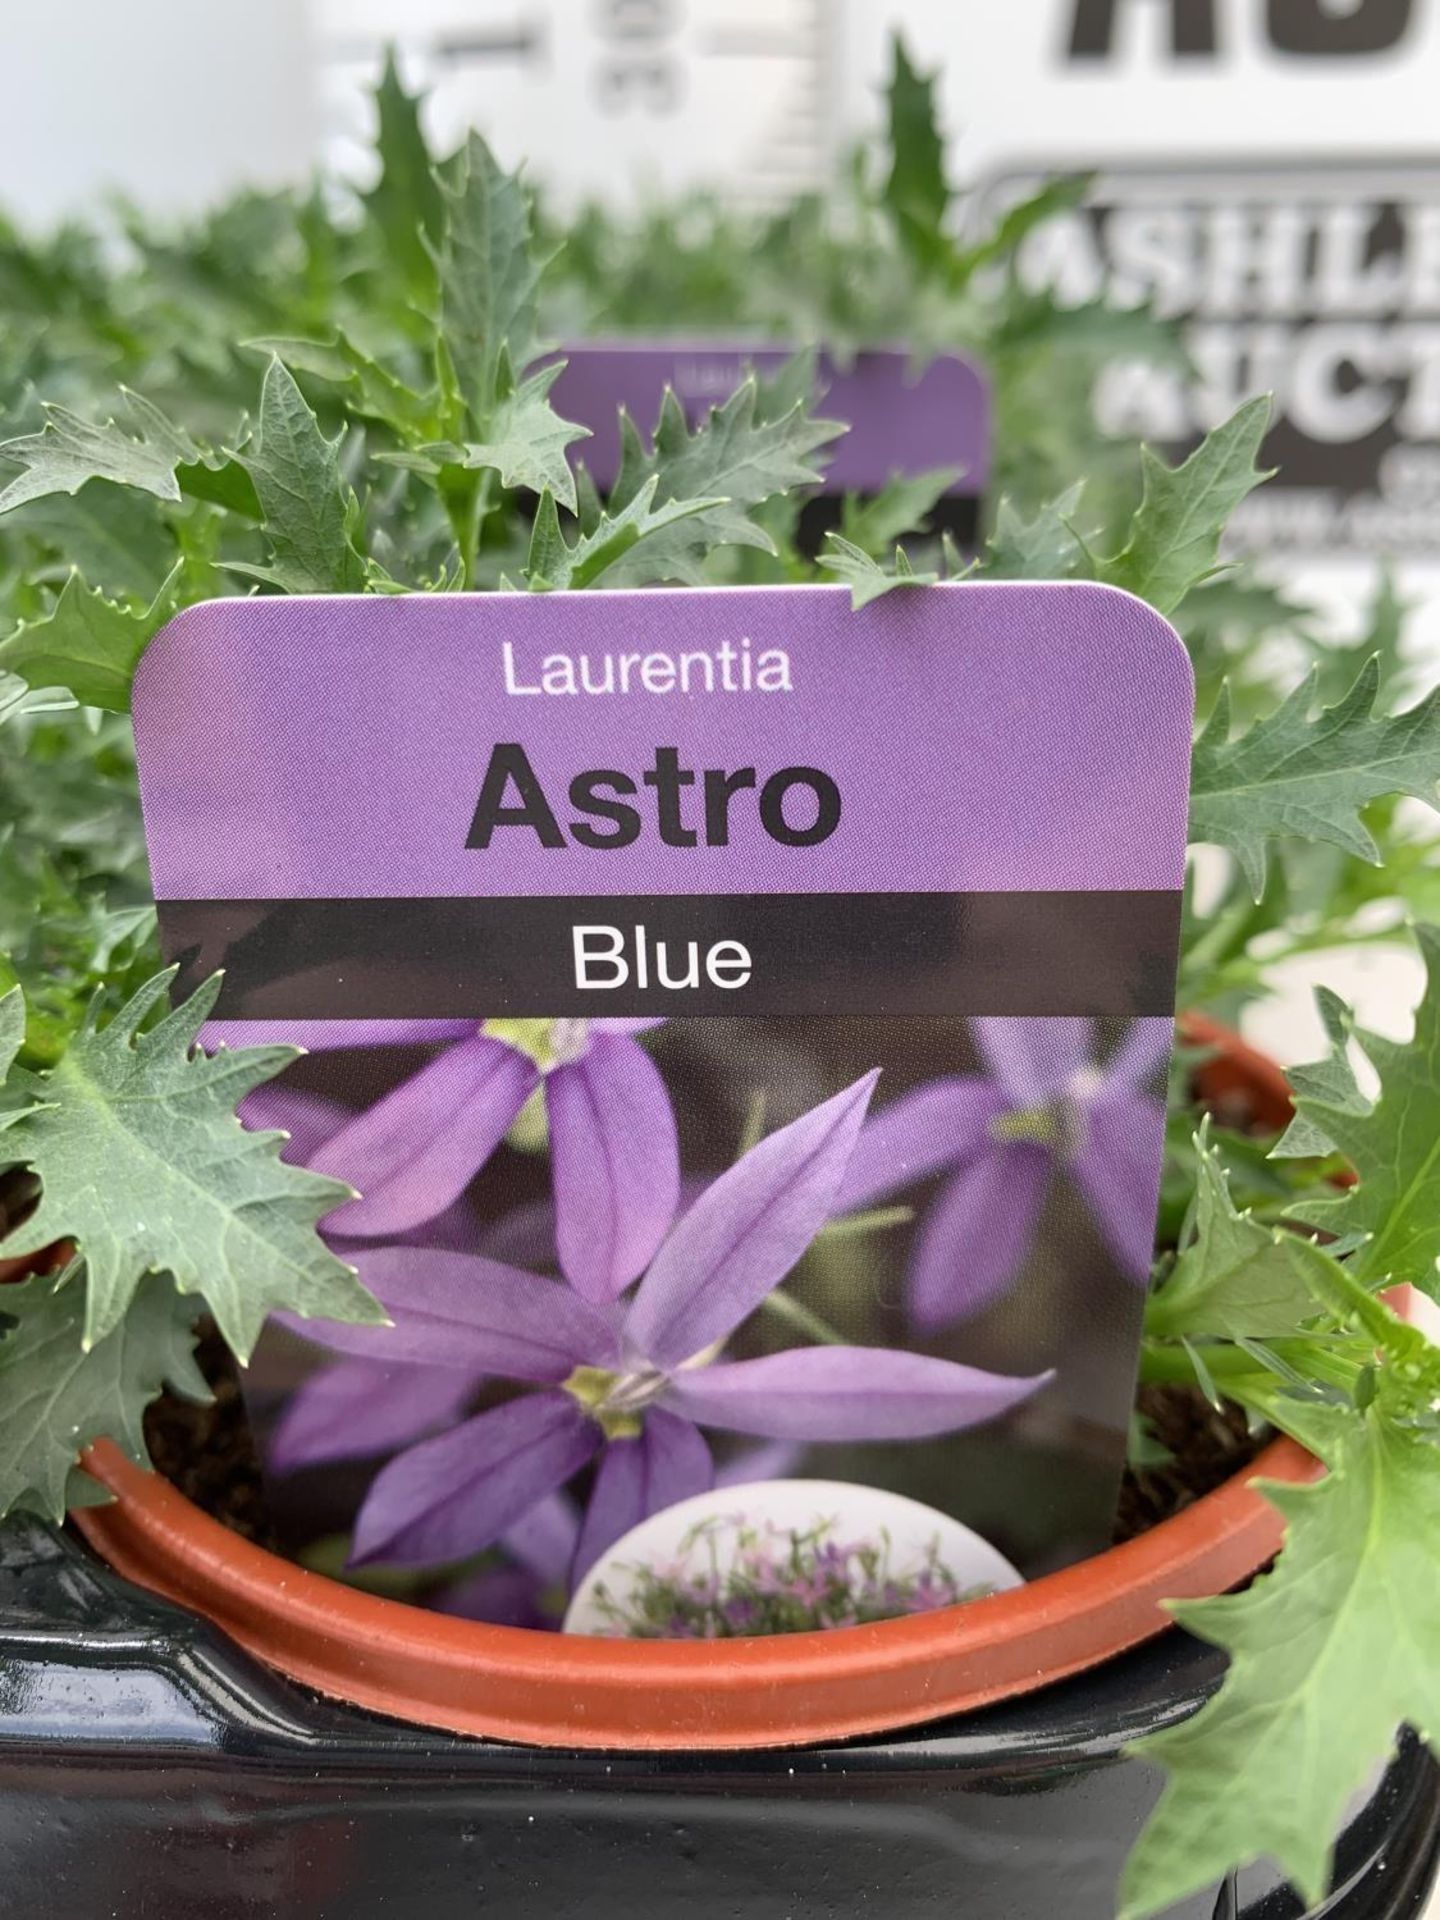 FIFTEEN LAURENTIA ASTRO BLUE BASKET PLANTS IN P9 POTS PLUS VAT TO BE SOLD FOR THE FIFTEEN - Image 4 of 4